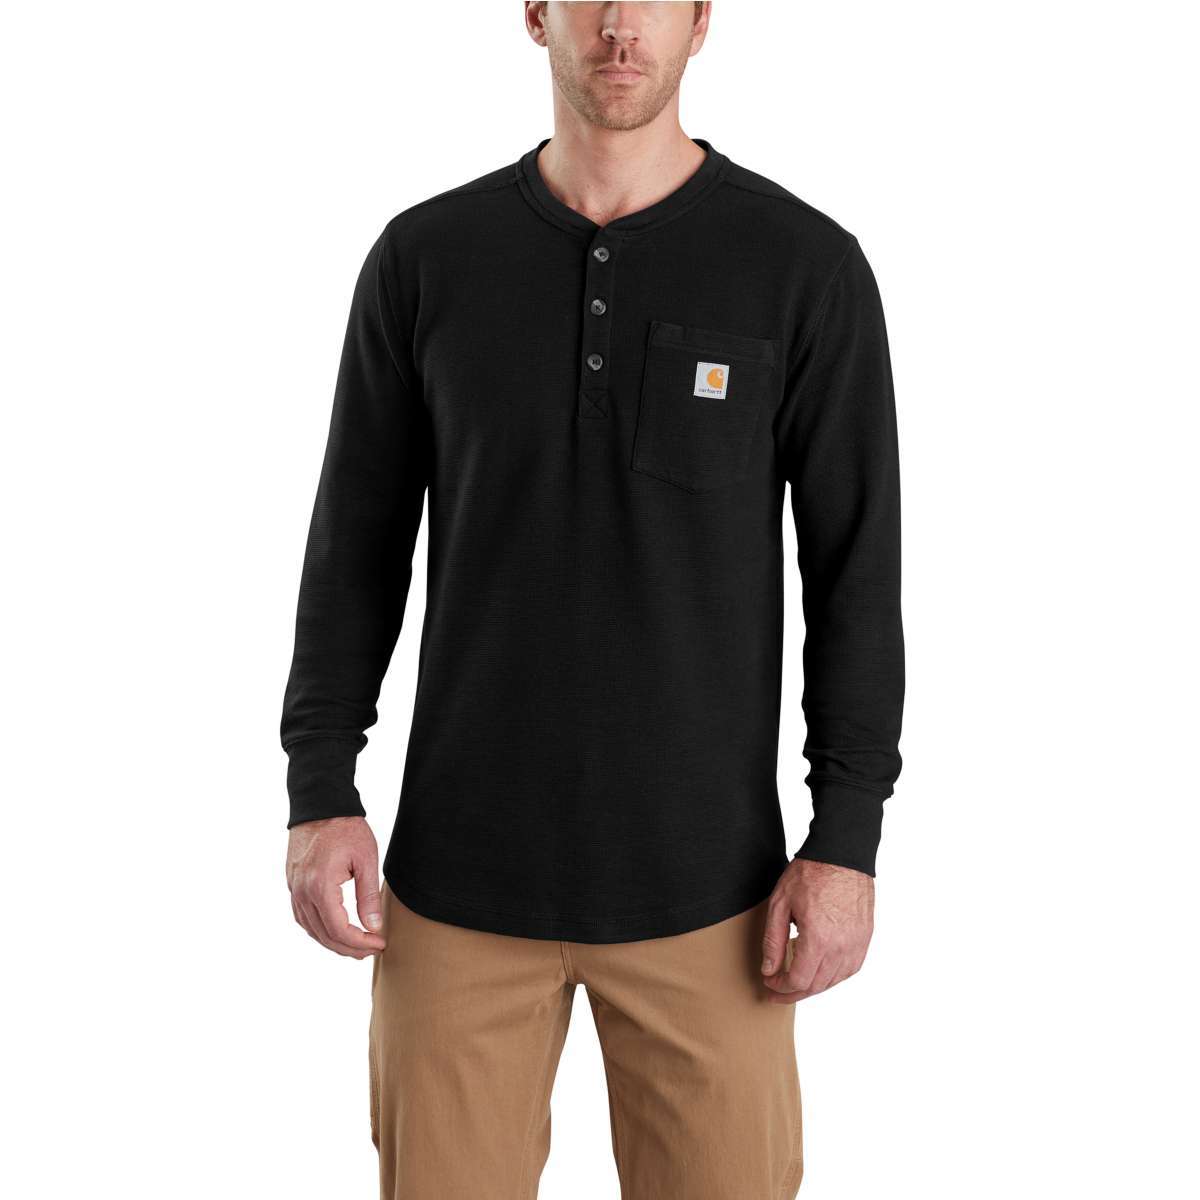 Carhartt Men's Tilden Long-Sleeve Henley Shirt - Black, M